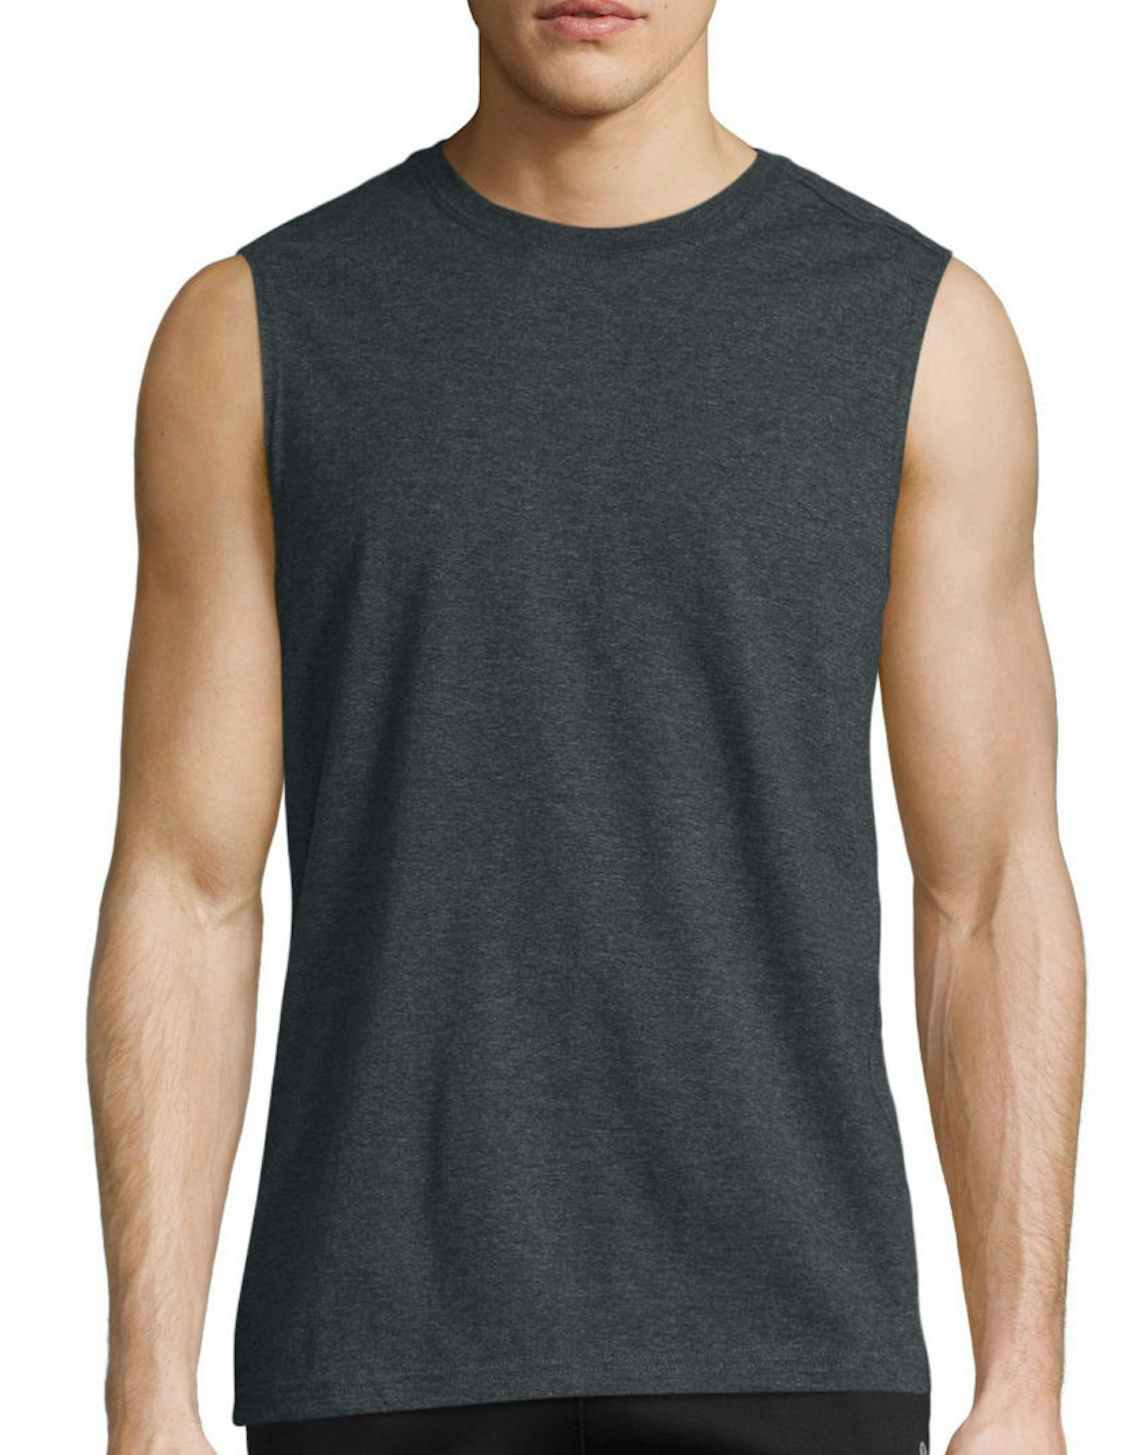 jcpenney-mens-xersion-sleeveless-shirt-012921